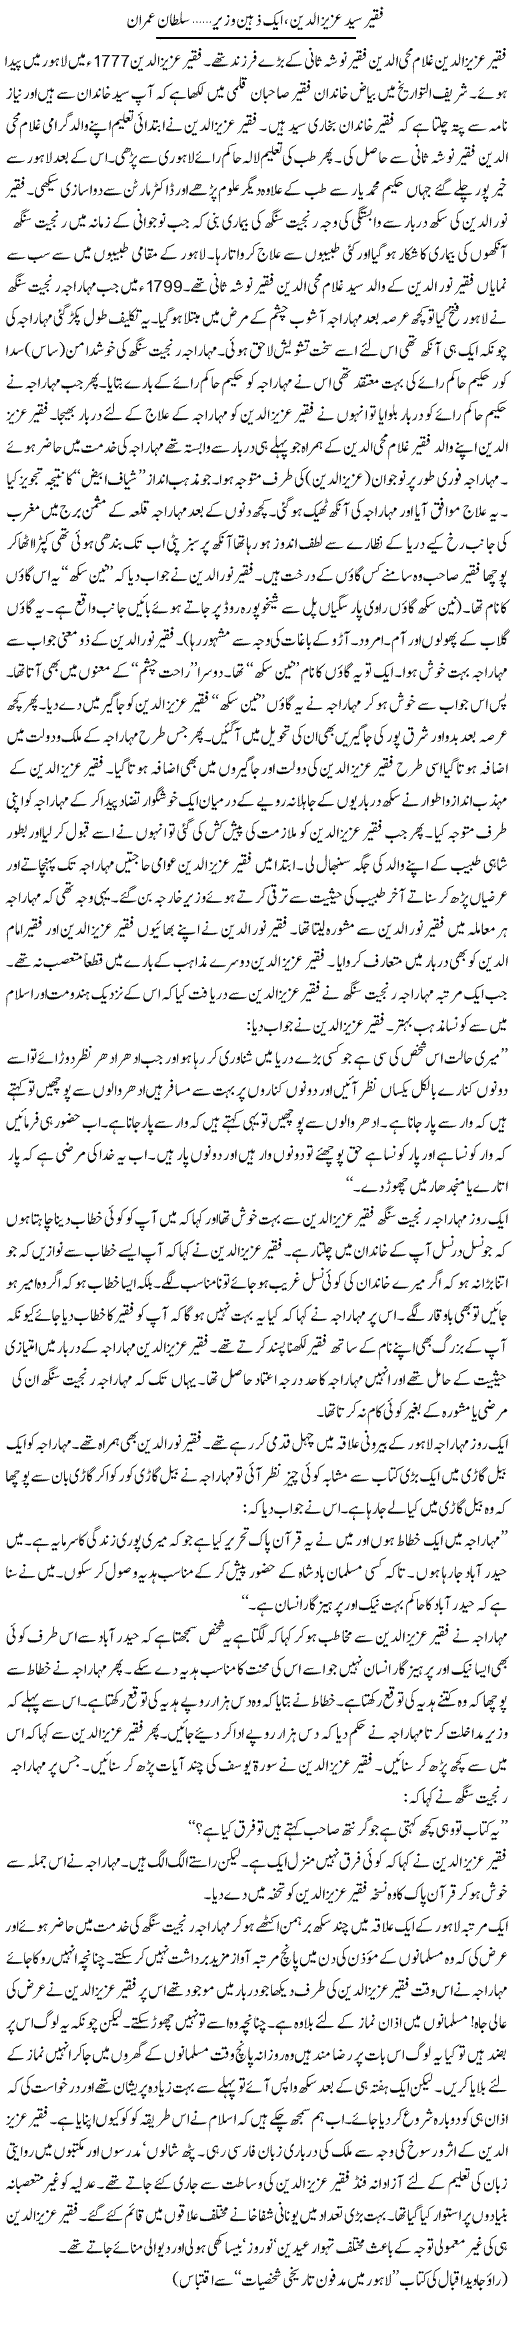 Faqeer Azeez Udin, Aik Zaheen Wazir | Sultan Imran | Daily Urdu Columns